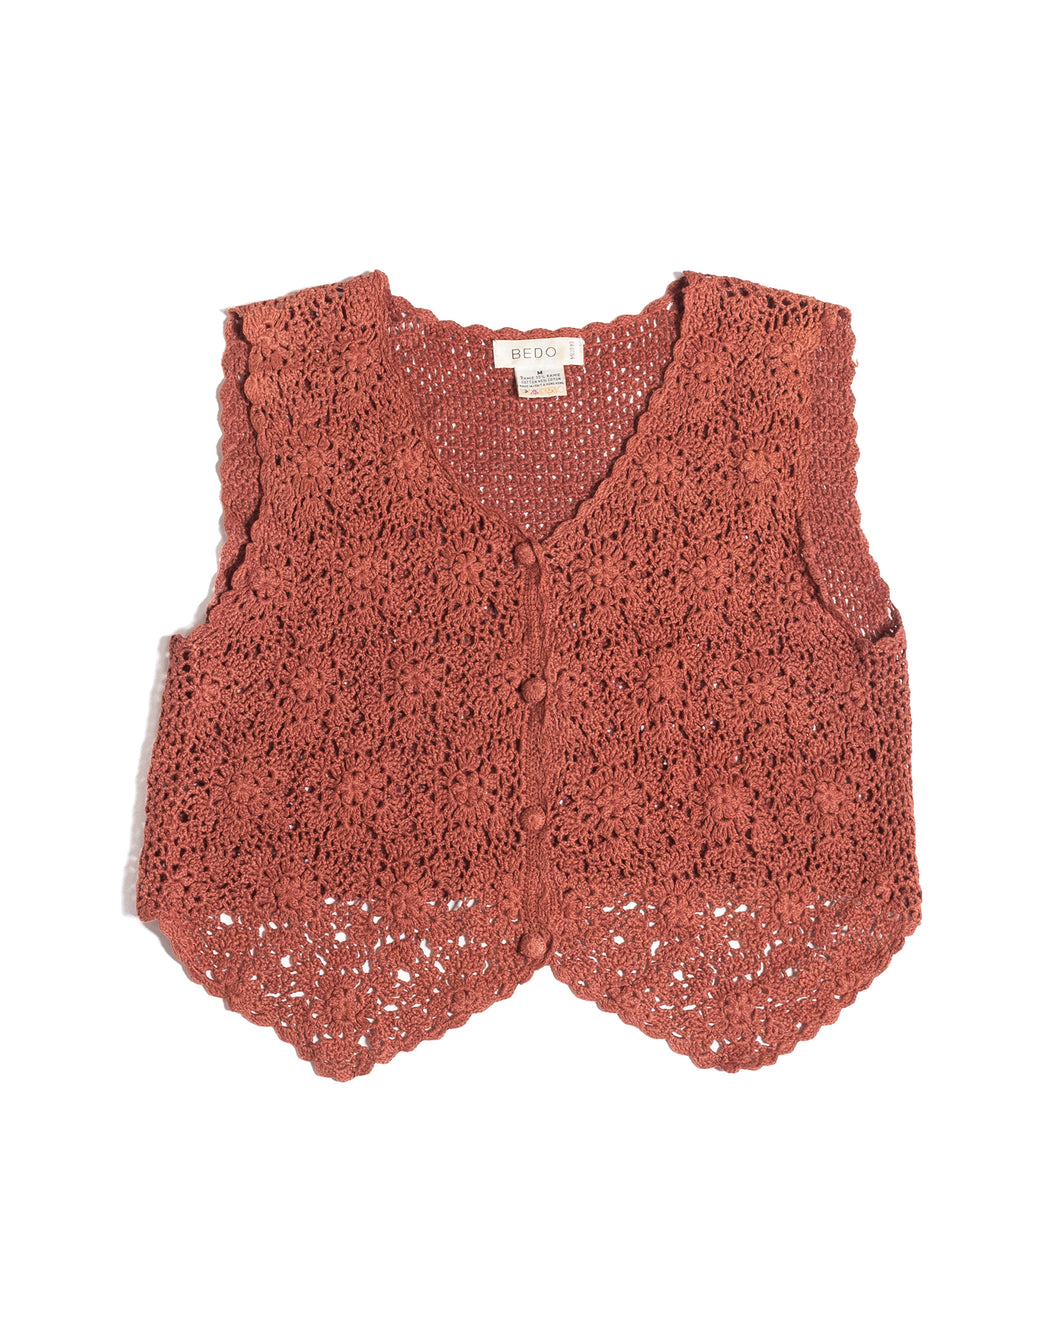 90s Bedo Sienna Crochet Vest